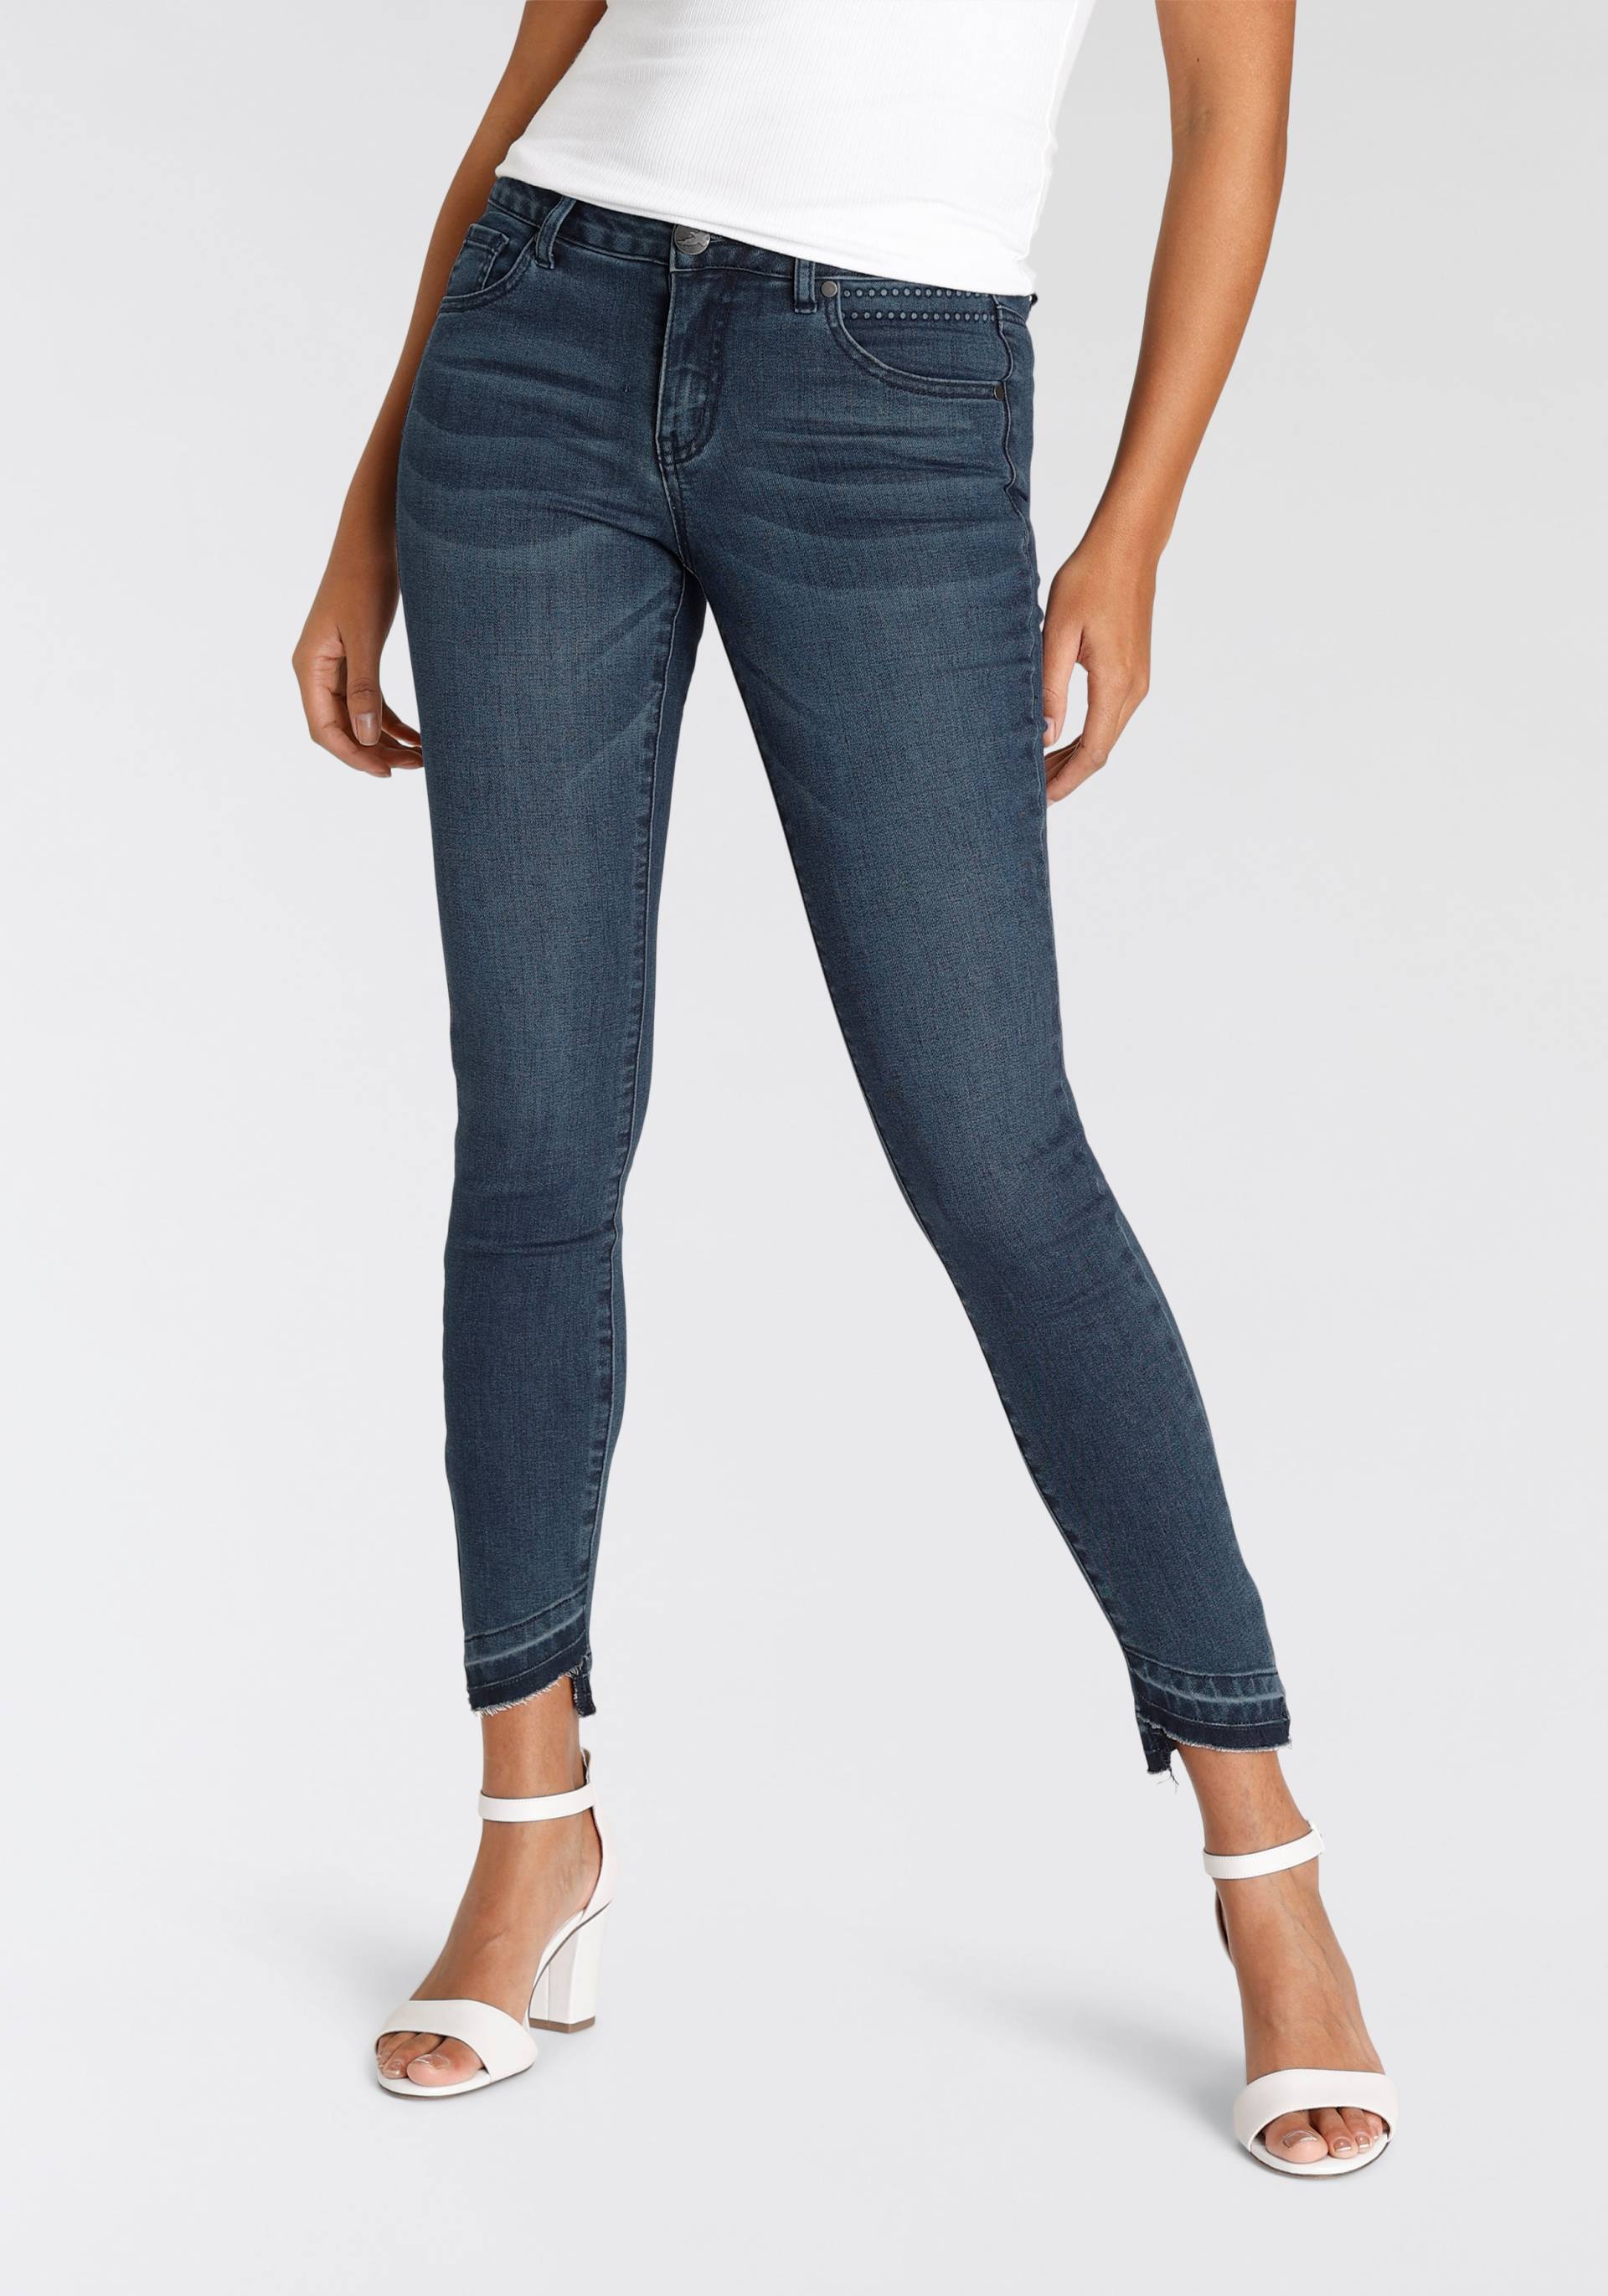 Arizona Skinny-fit-Jeans, Mit Kontrastsaum von Arizona